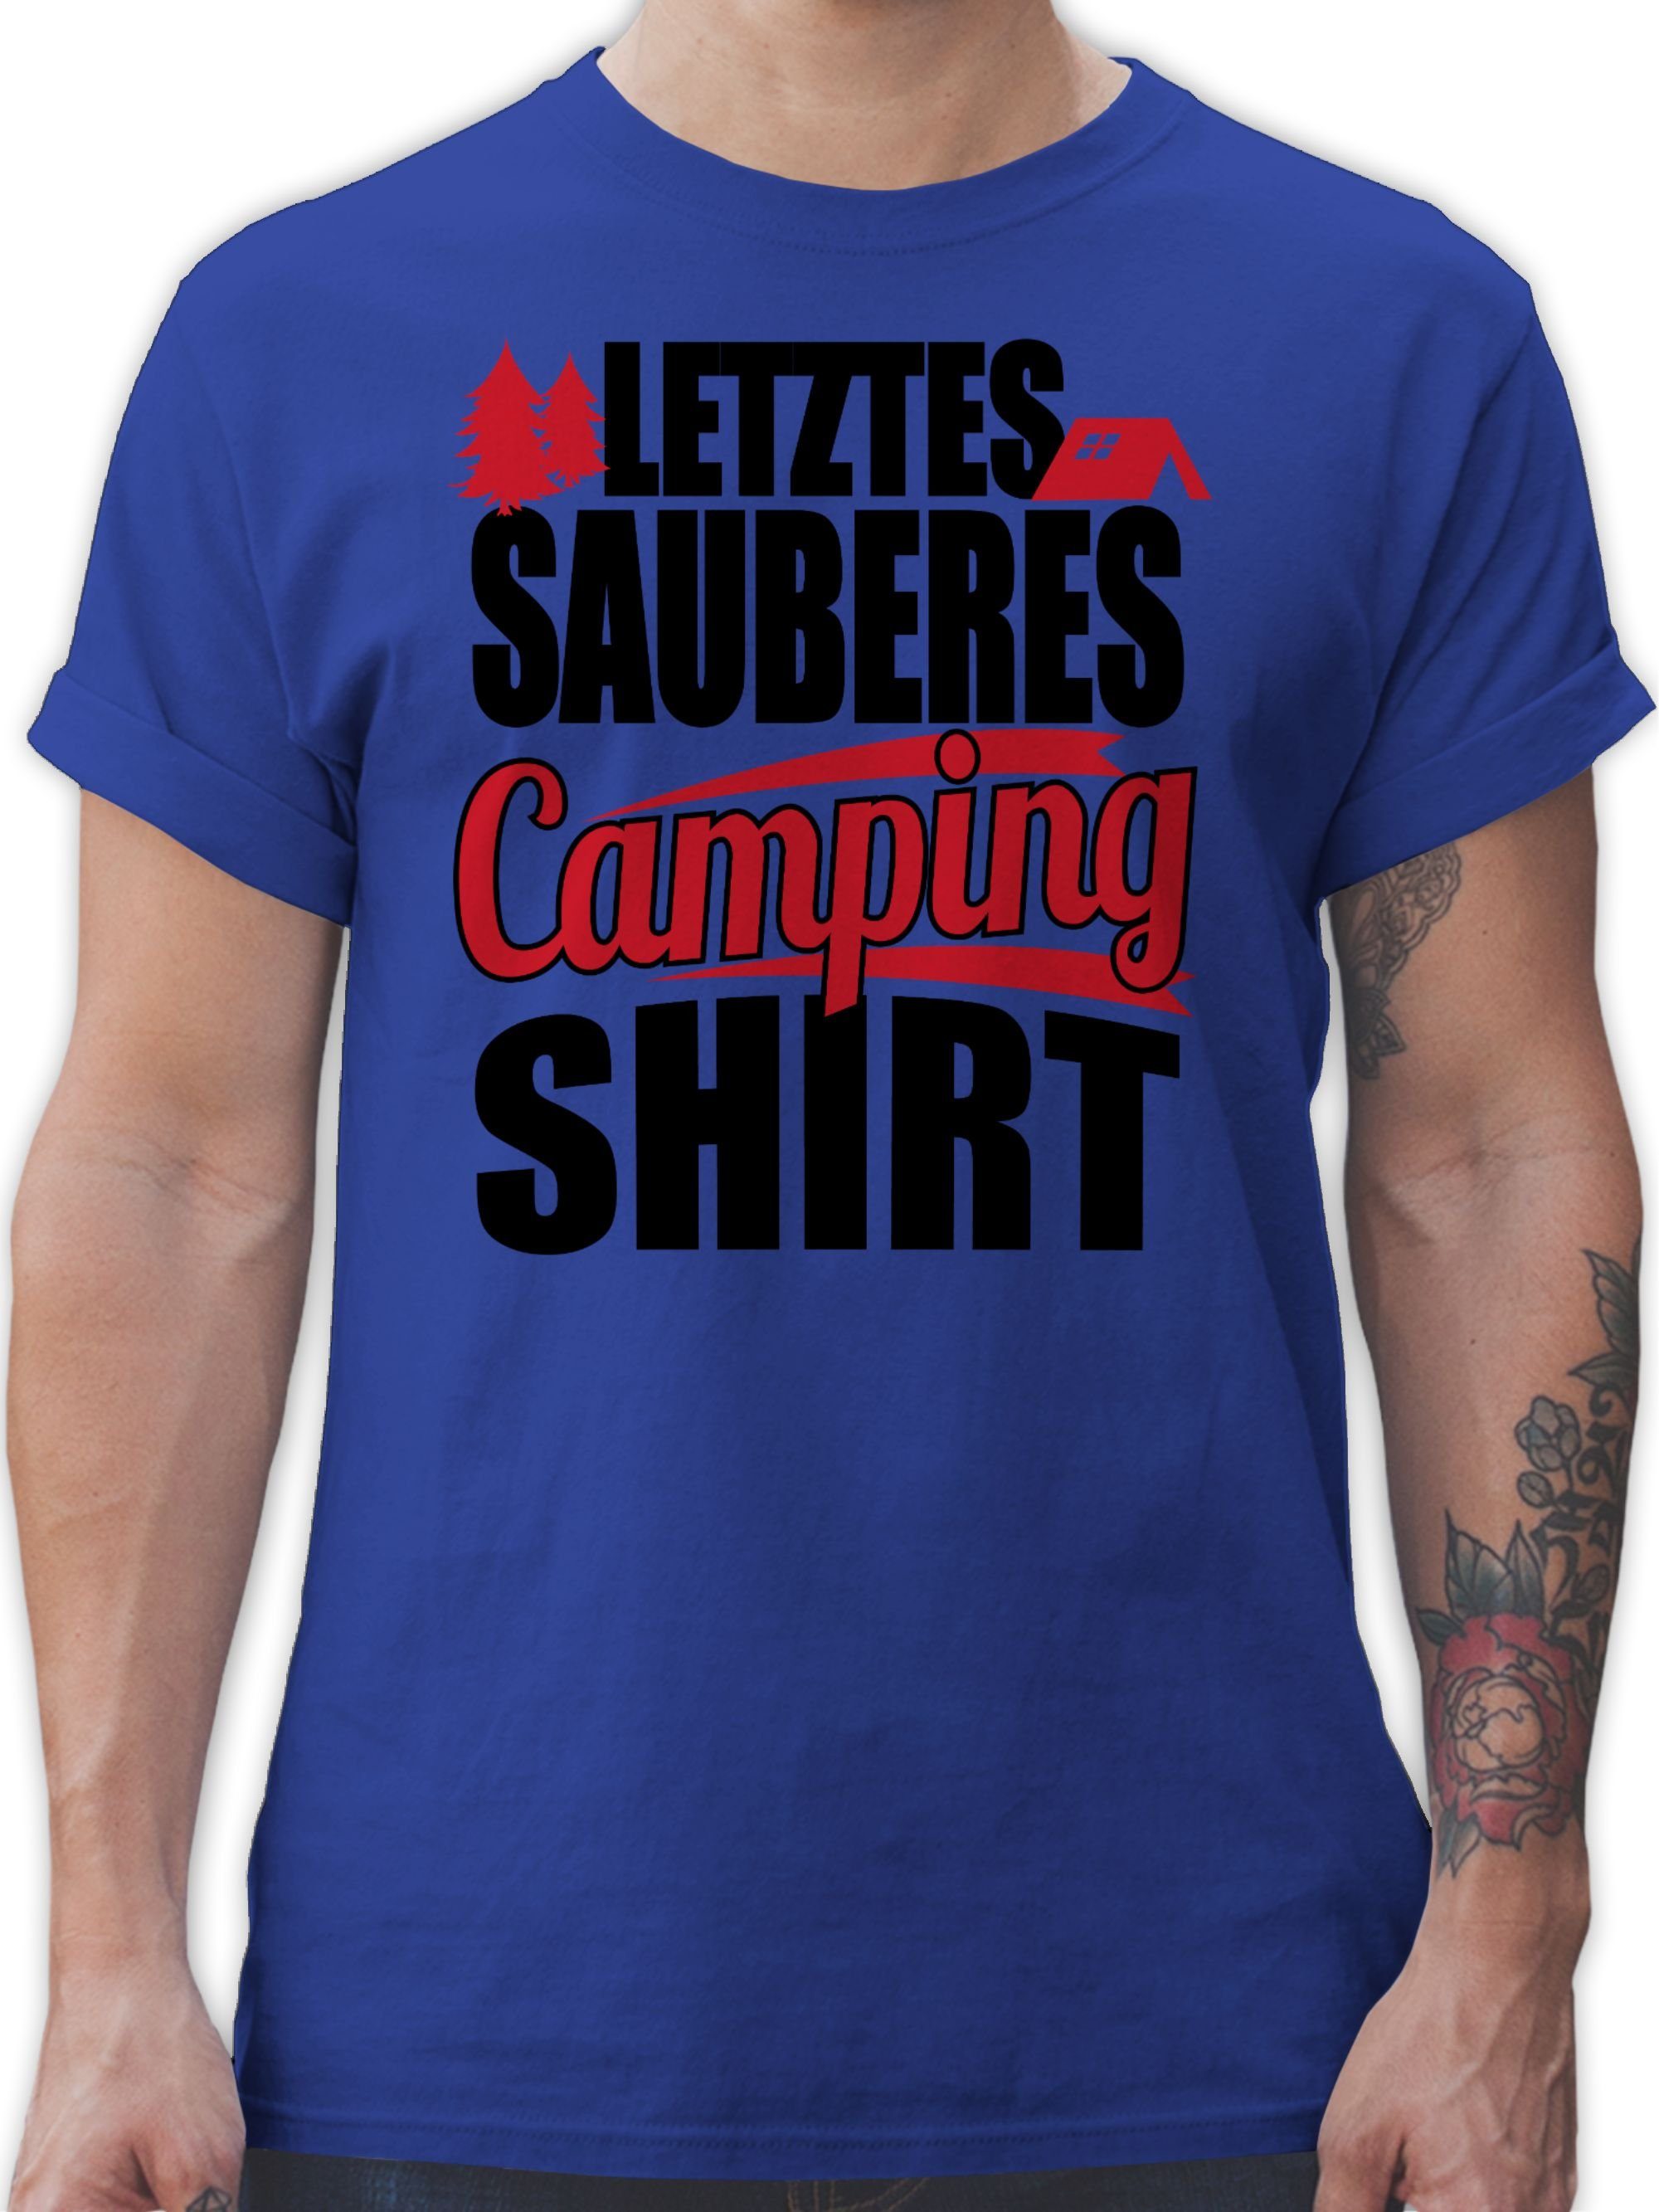 Shirtracer T-Shirt Letztes sauberes Camping Shirt schwarz Hobby Outfit 3 Royalblau